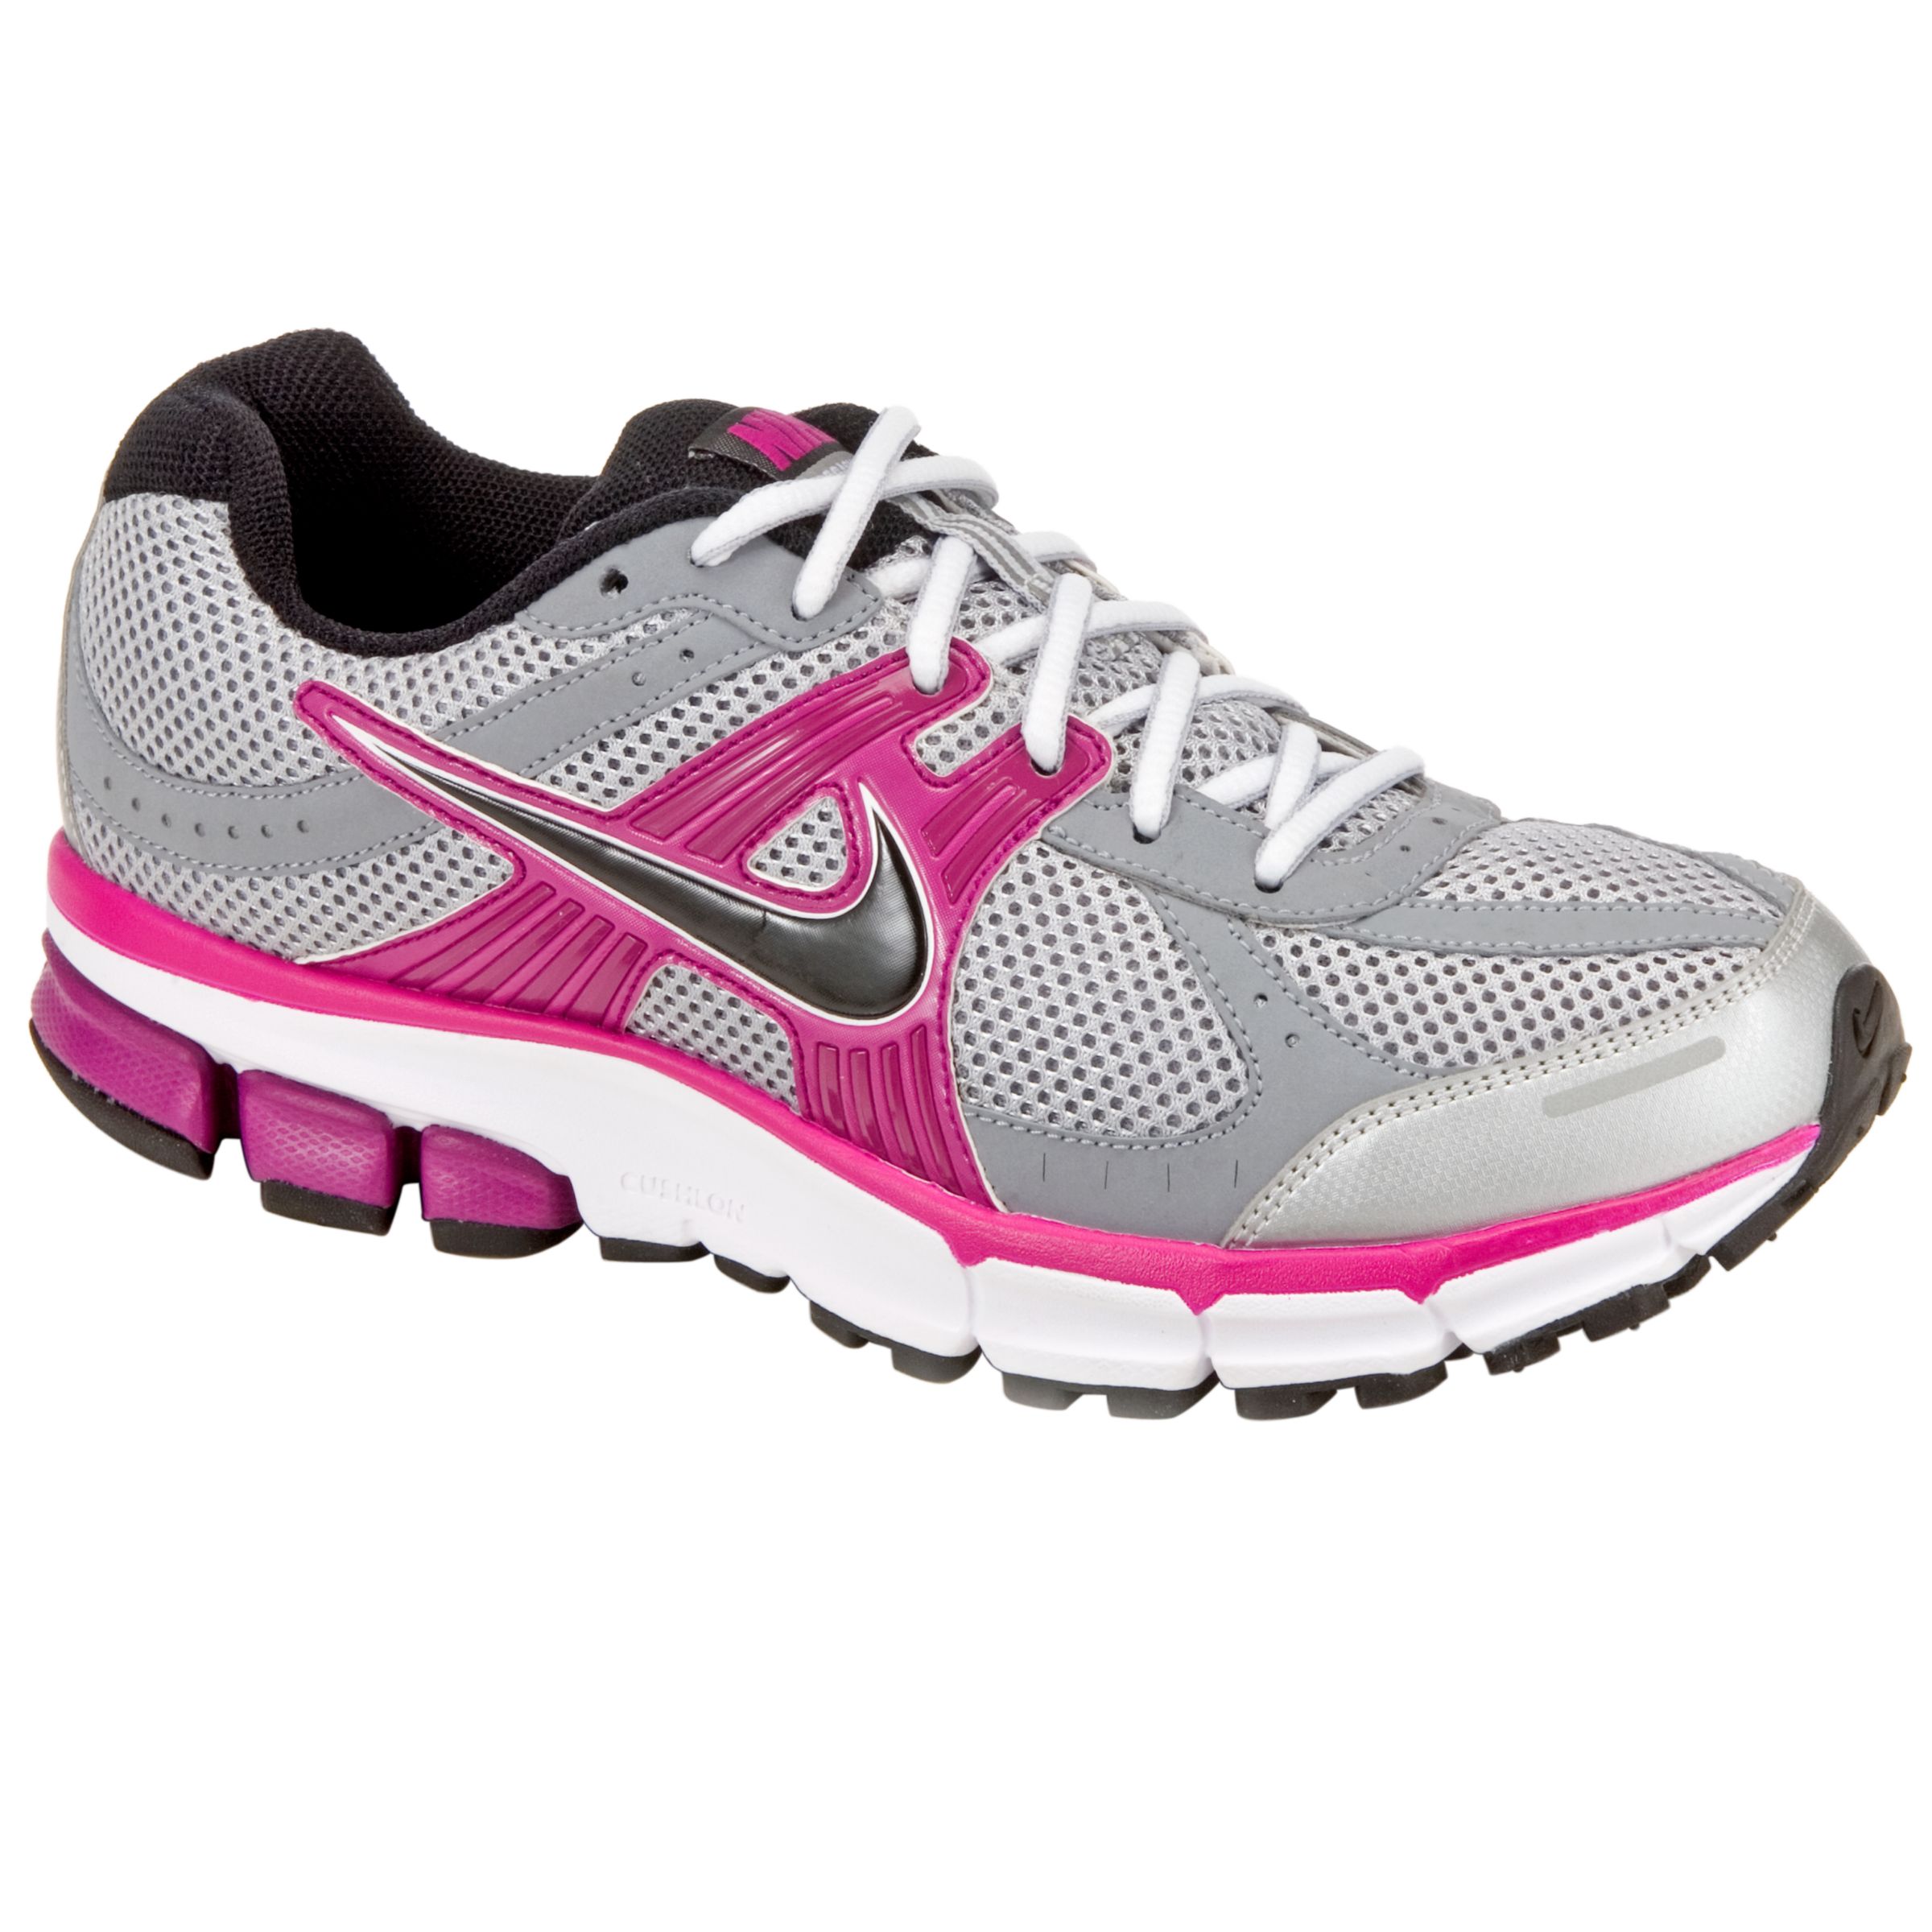 Nike Air Pegasus 27 Womens Running Shoes,